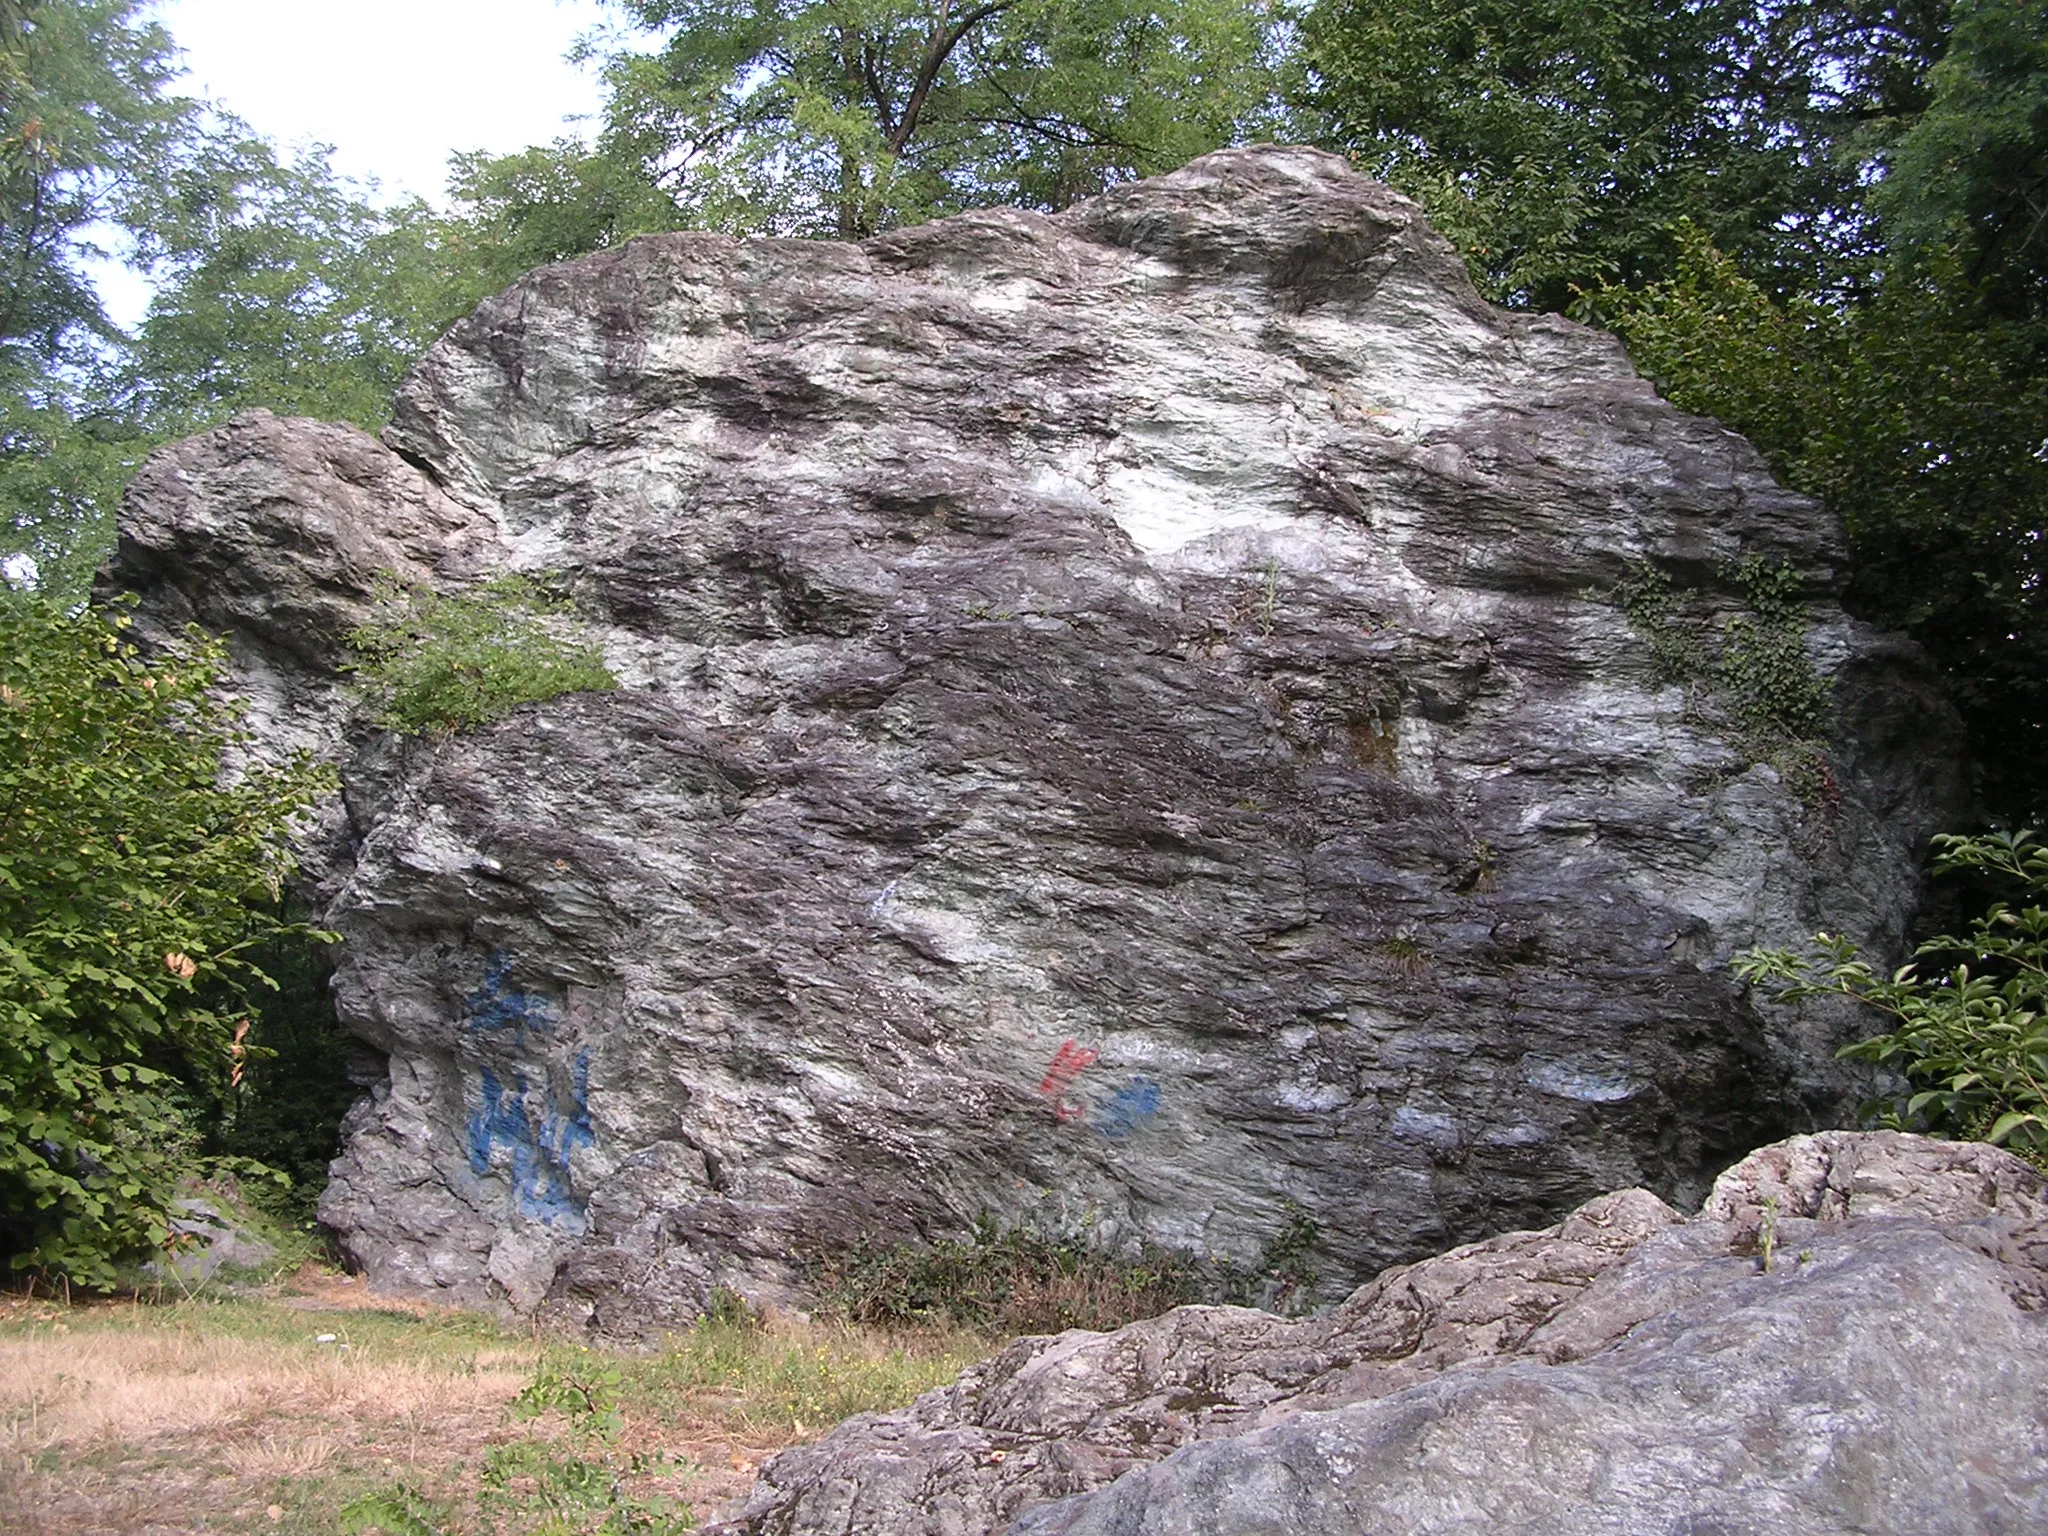 Photo showing: "Preia Buia" Rock in Sesto Calende (Va), Italy